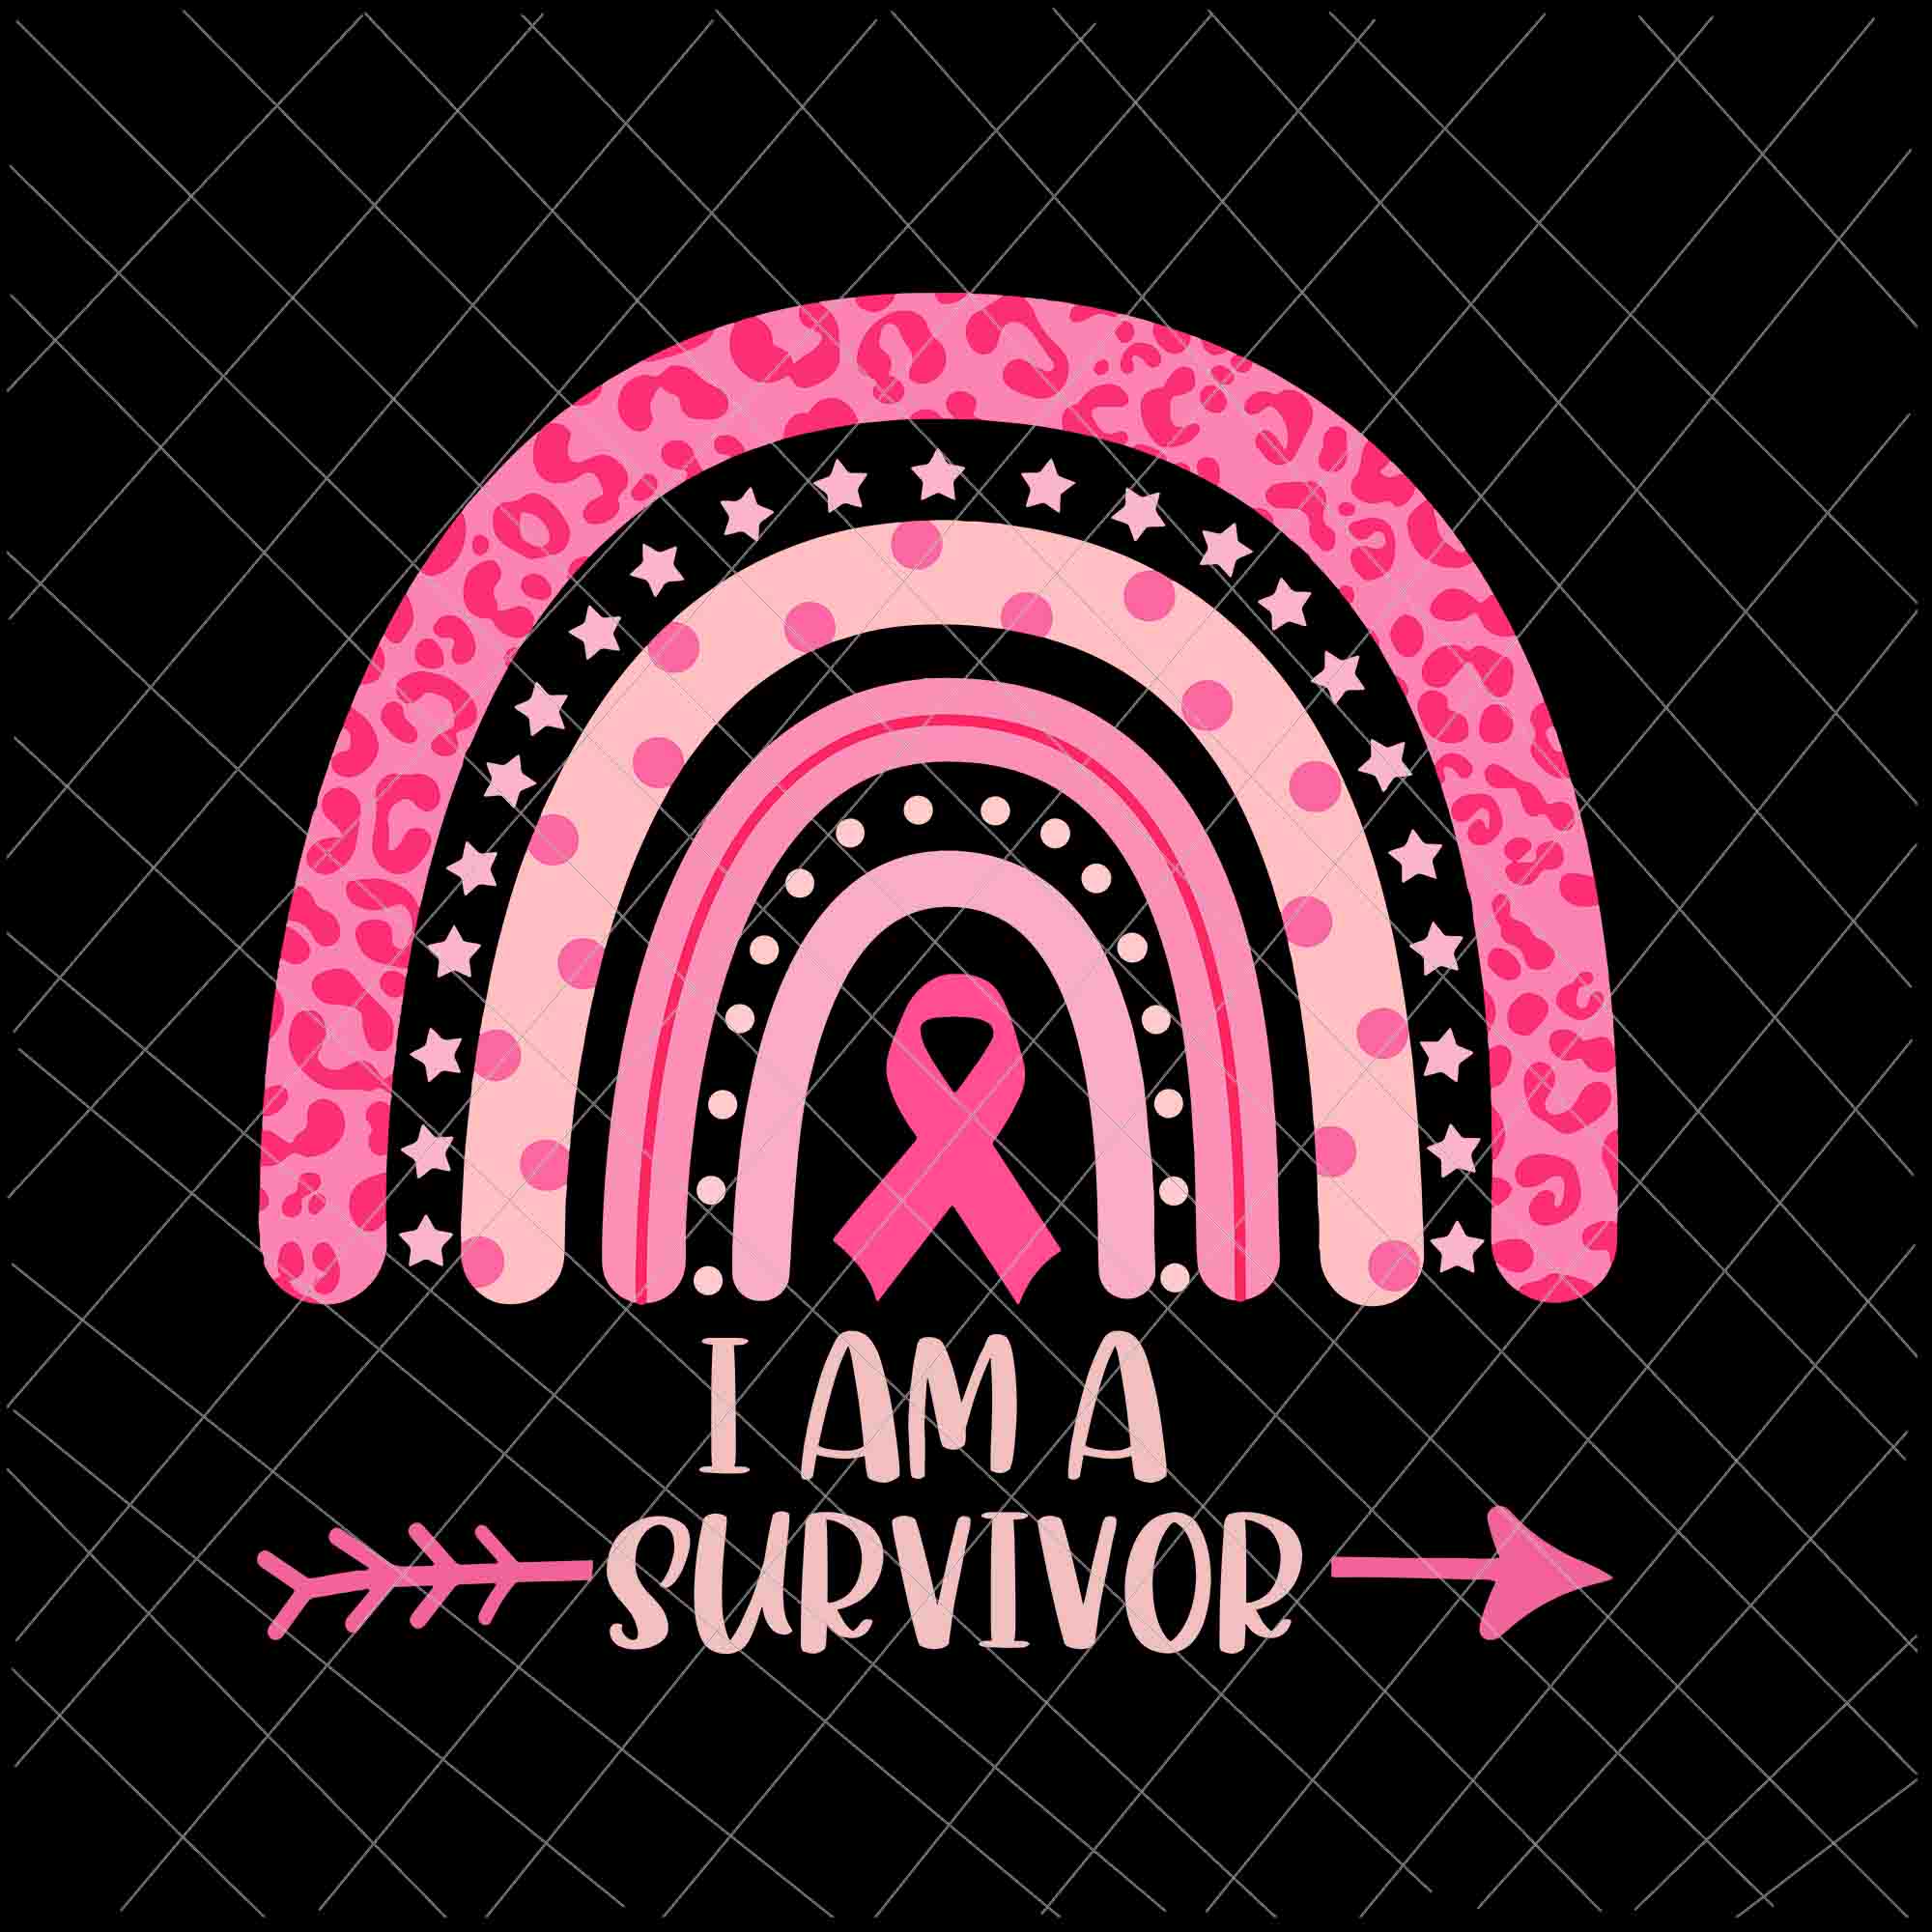 I Am A Survivor Svg, Survivor  Breast Cancer Awareness Svg, Survivor Pink Ribbon Cancer Awareness Svg